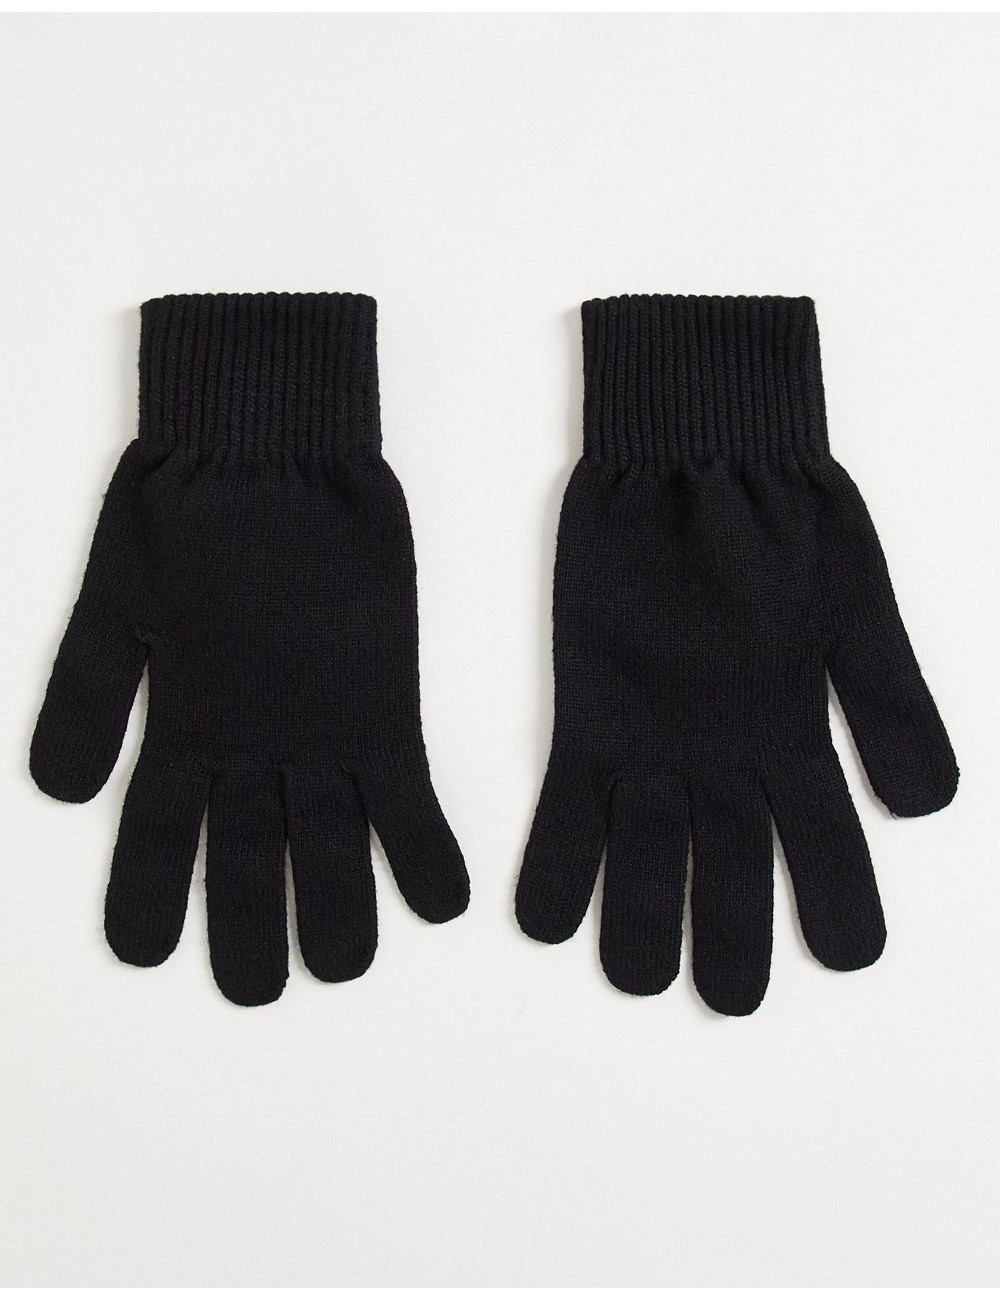 ASOS DESIGN gloves in black